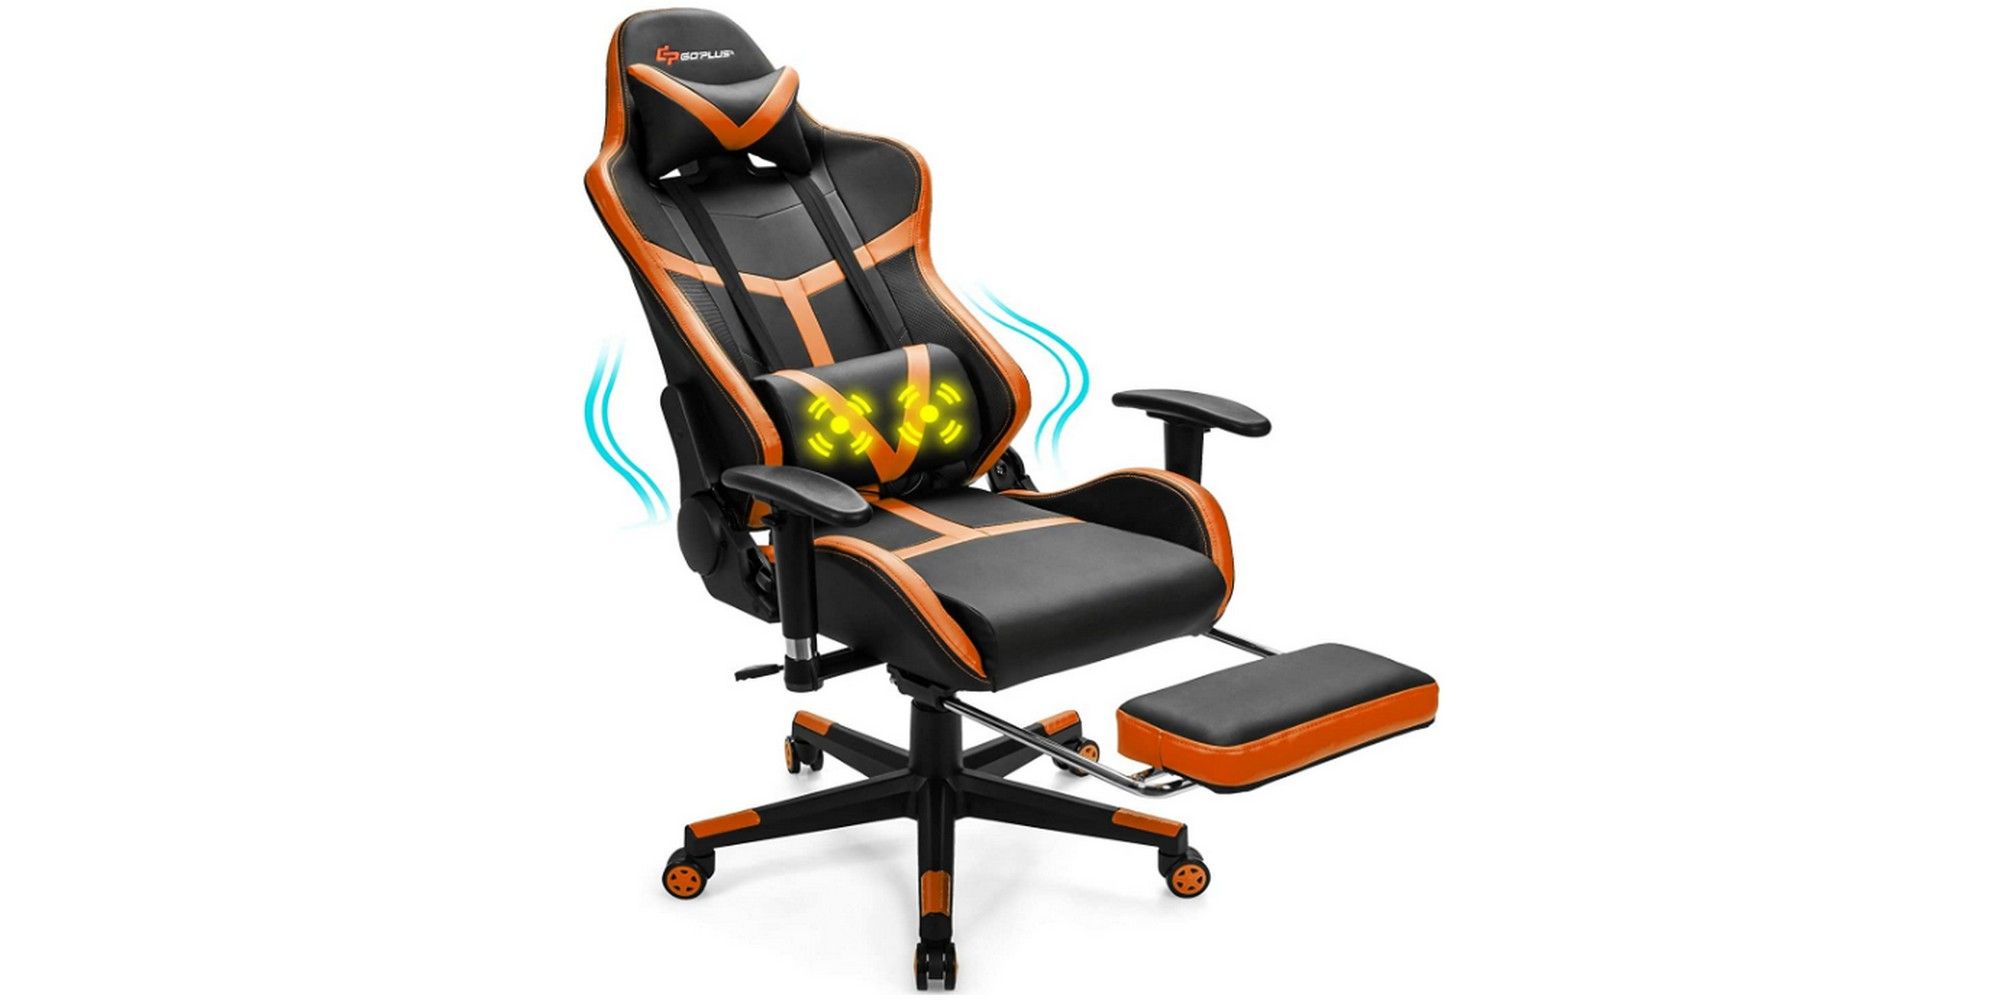 powerstone reclining lumbar massage pillow gaming chair buyer's guide